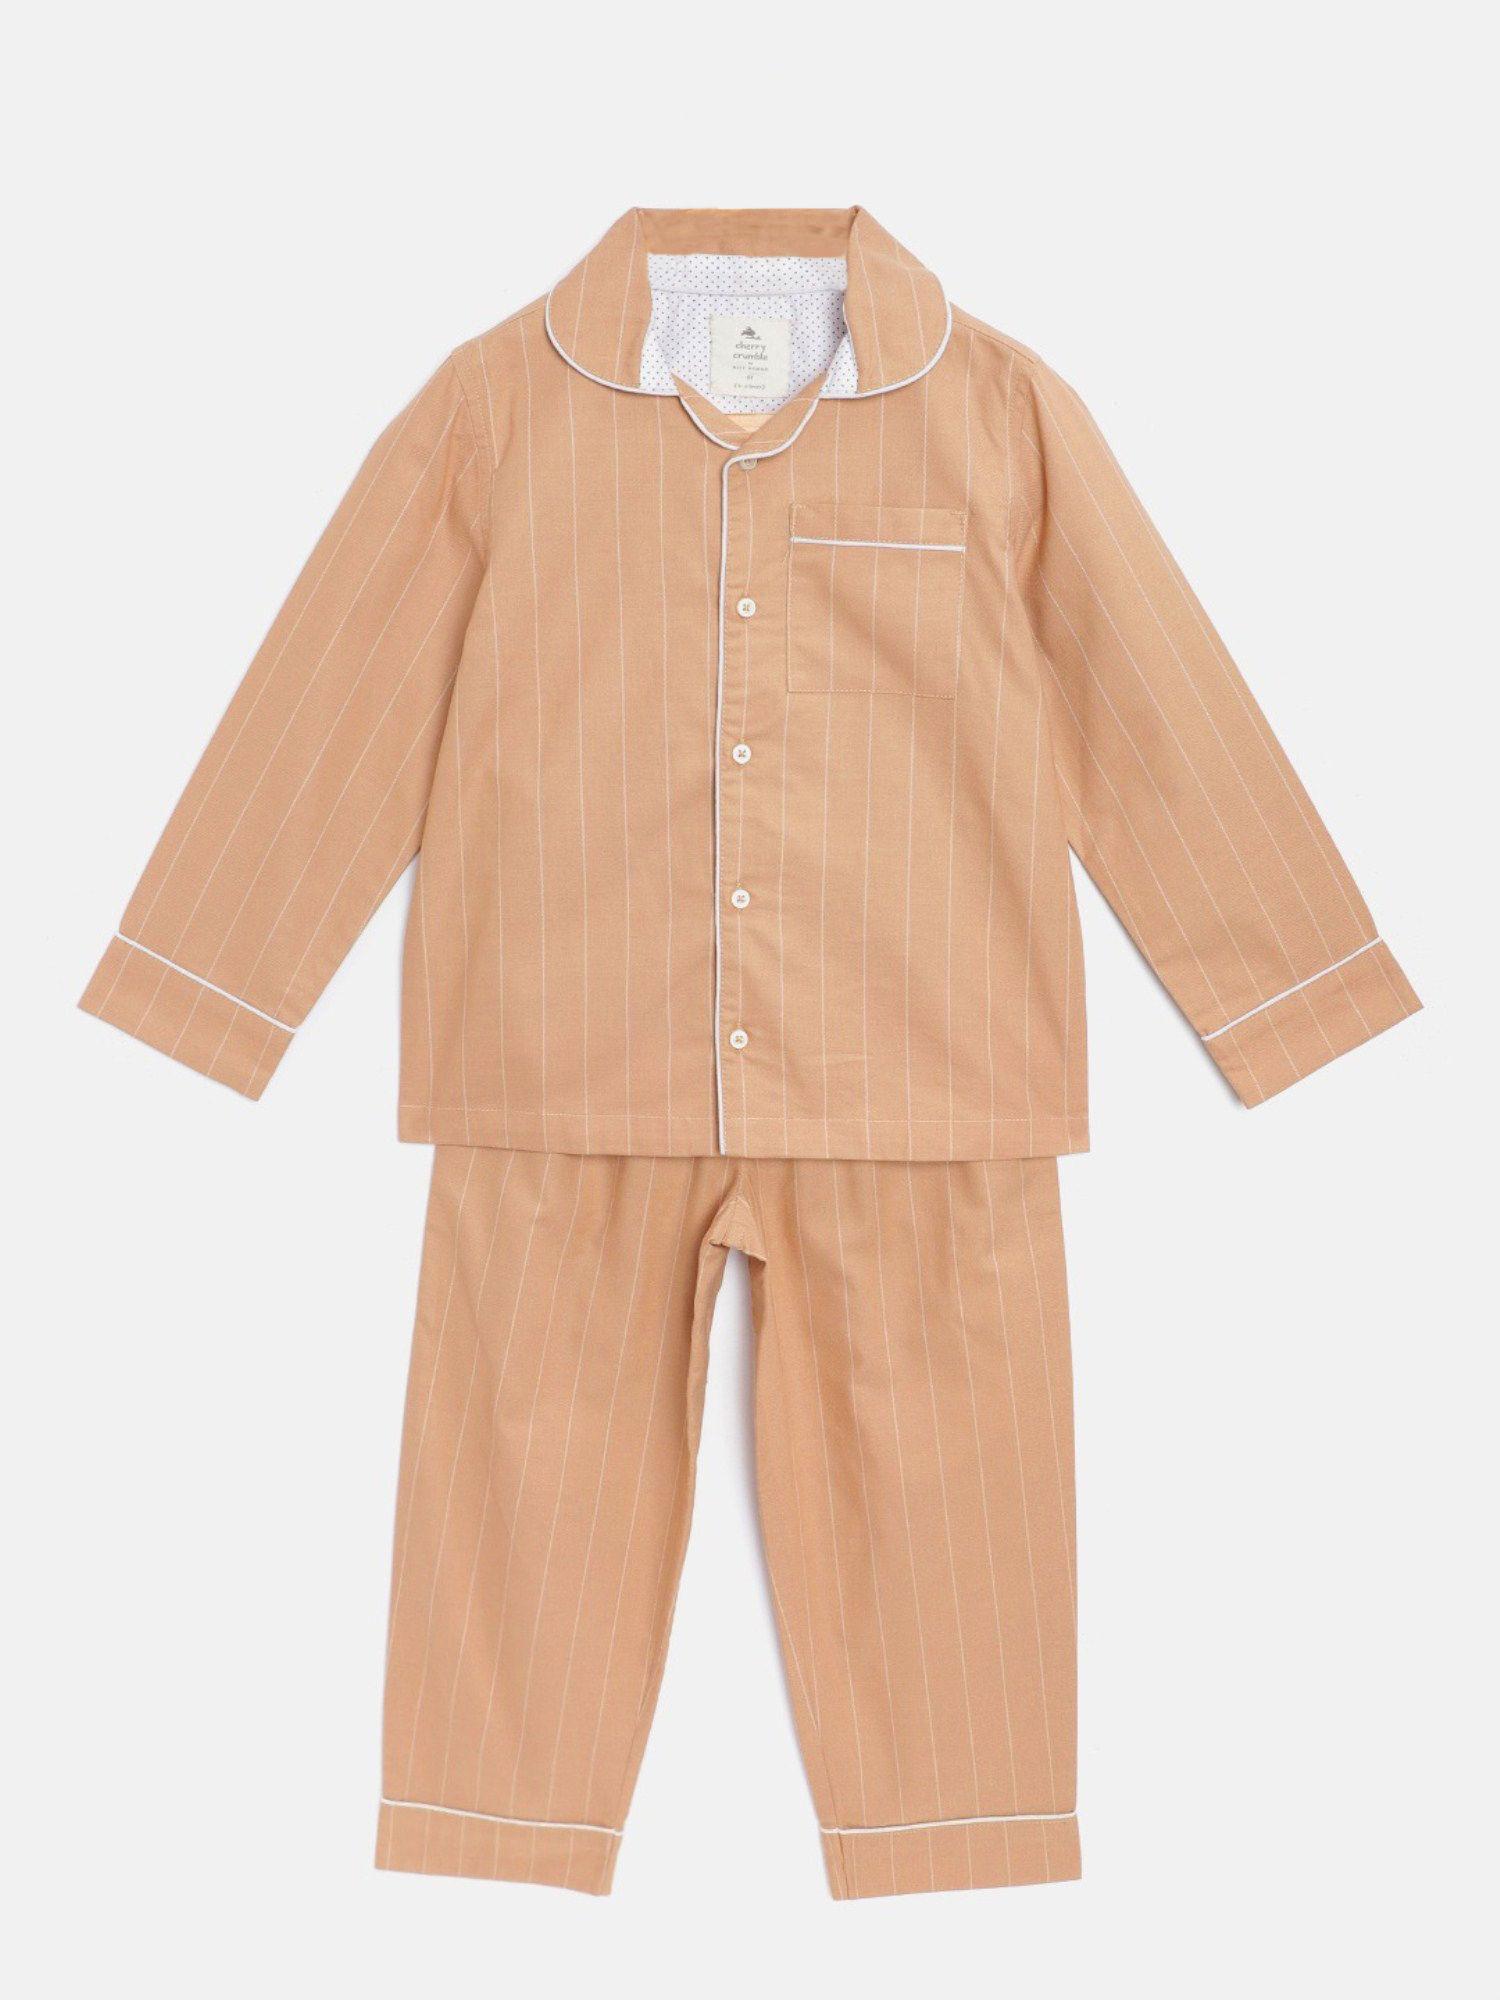 brown striped top and pyjama comfy night suit (set of 2)